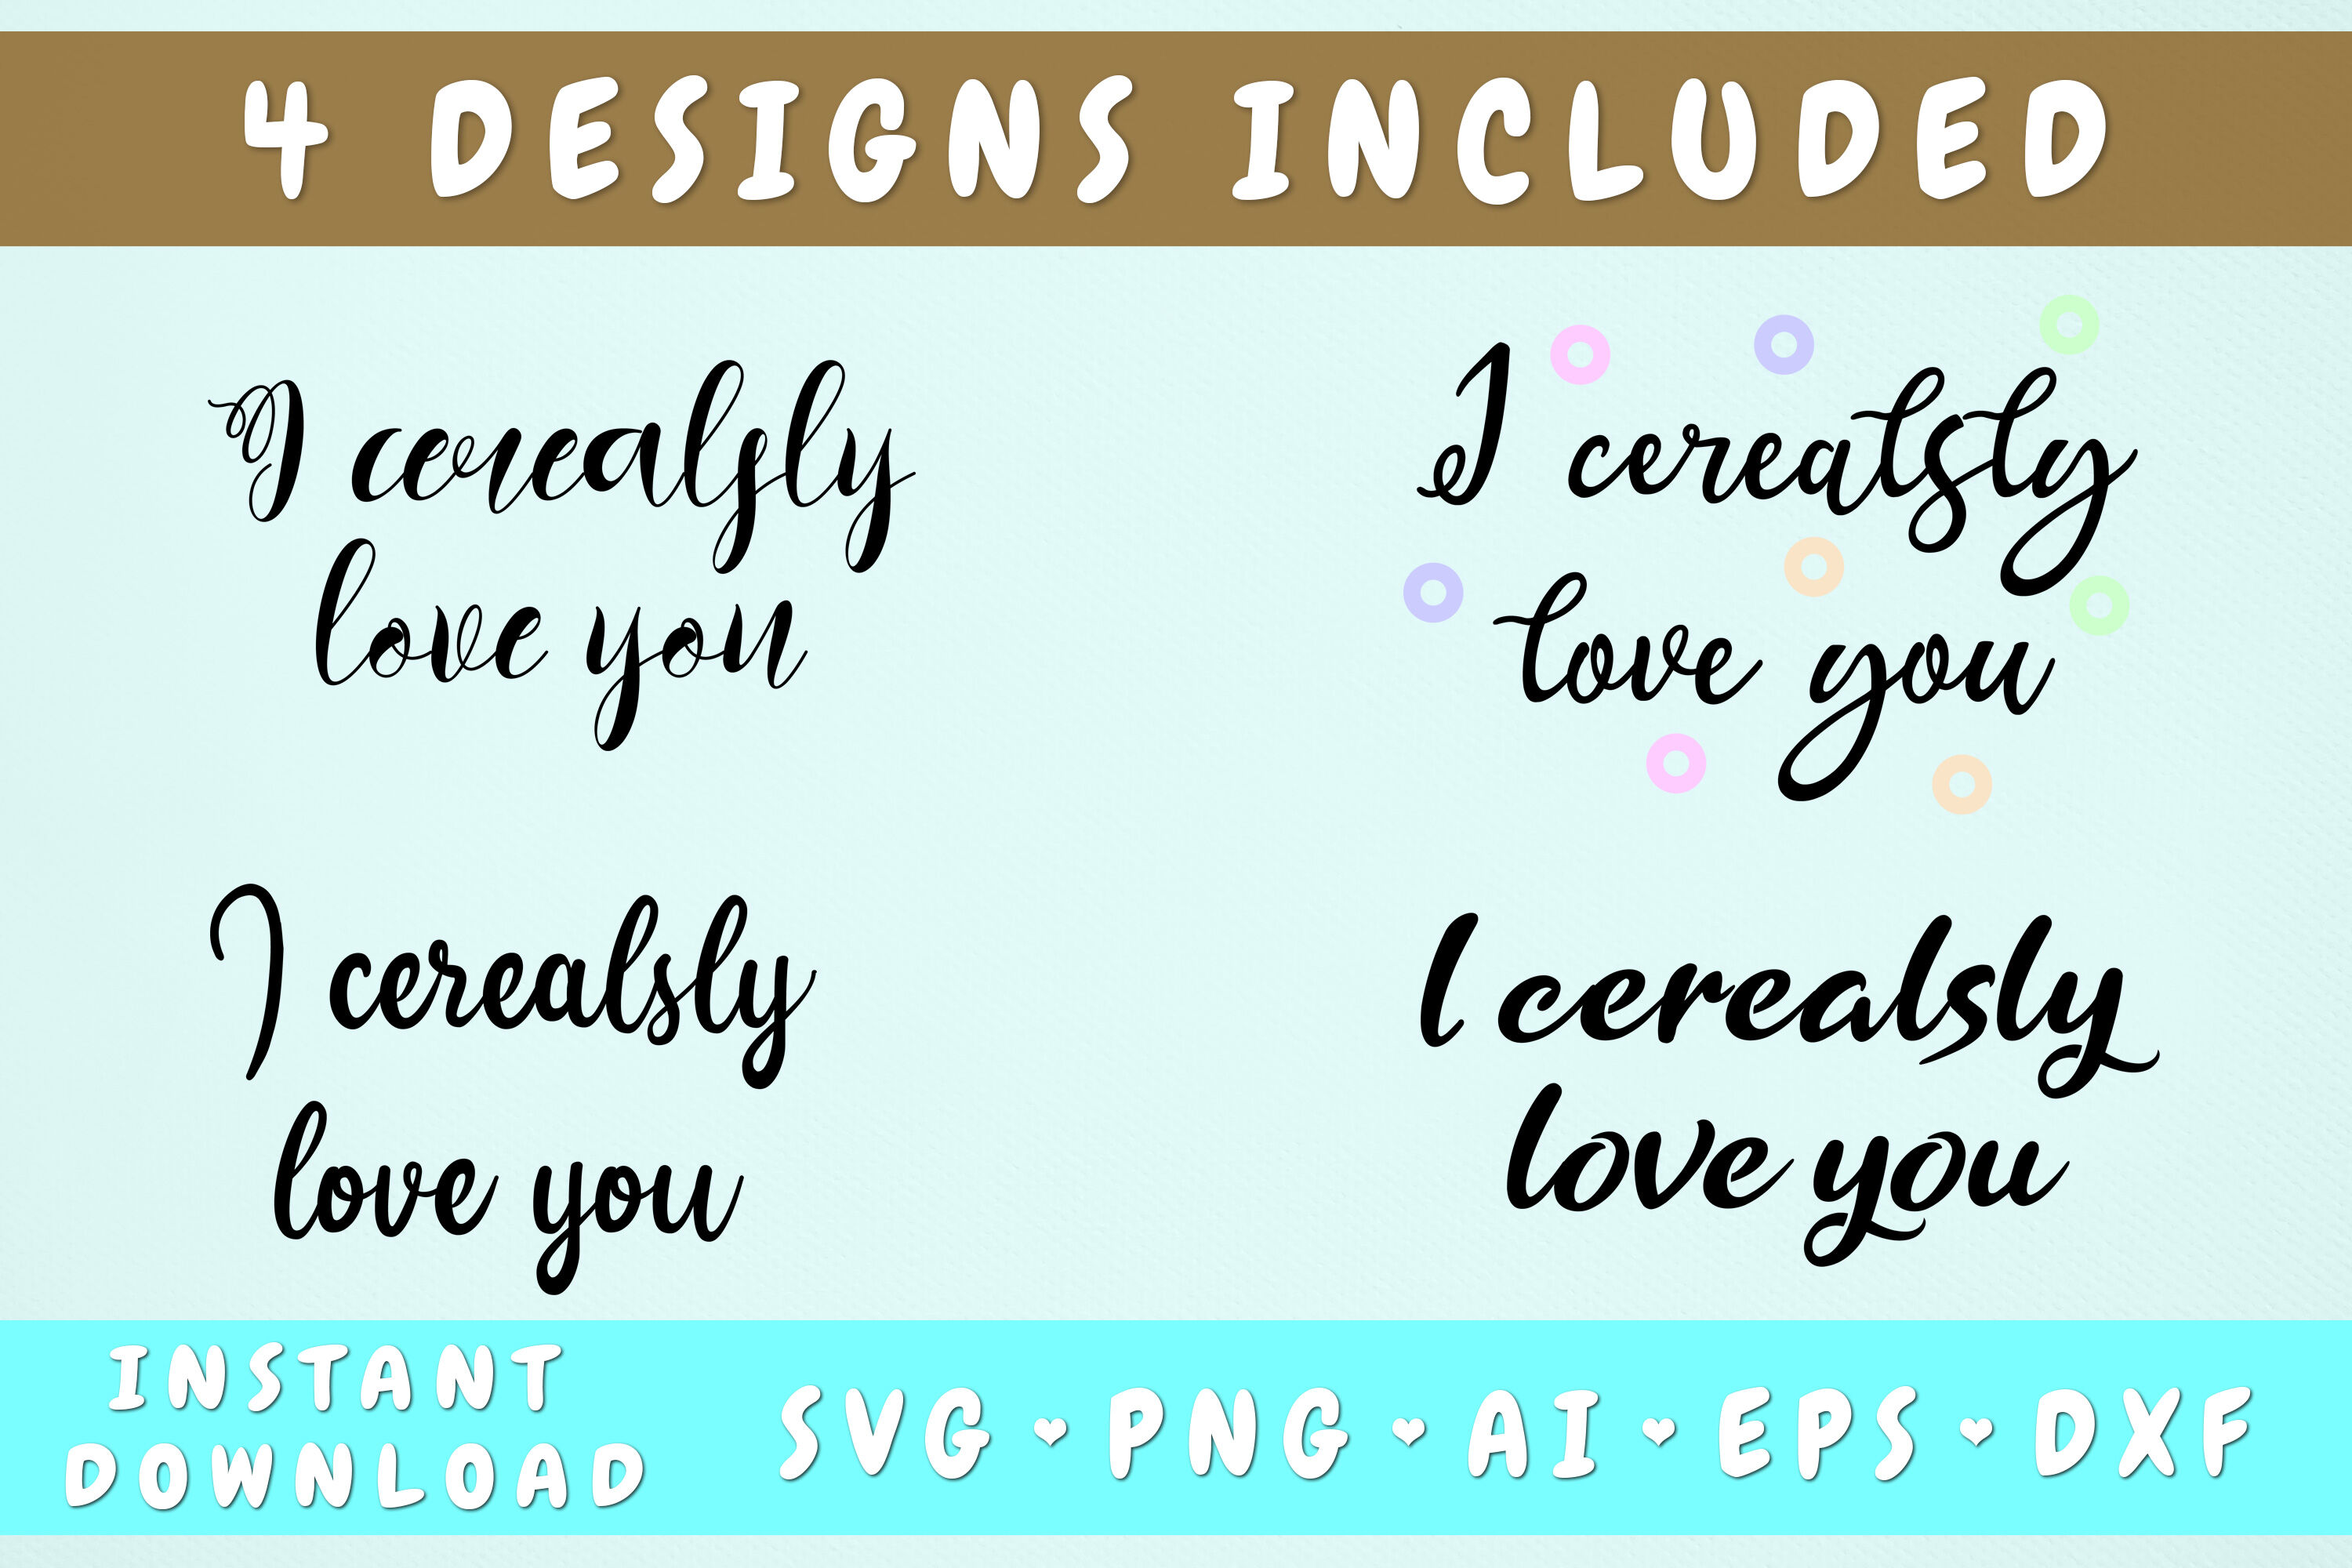 Download I Cerealsly Love You SVG - 4 Designs By LemonStudioCreations | TheHungryJPEG.com